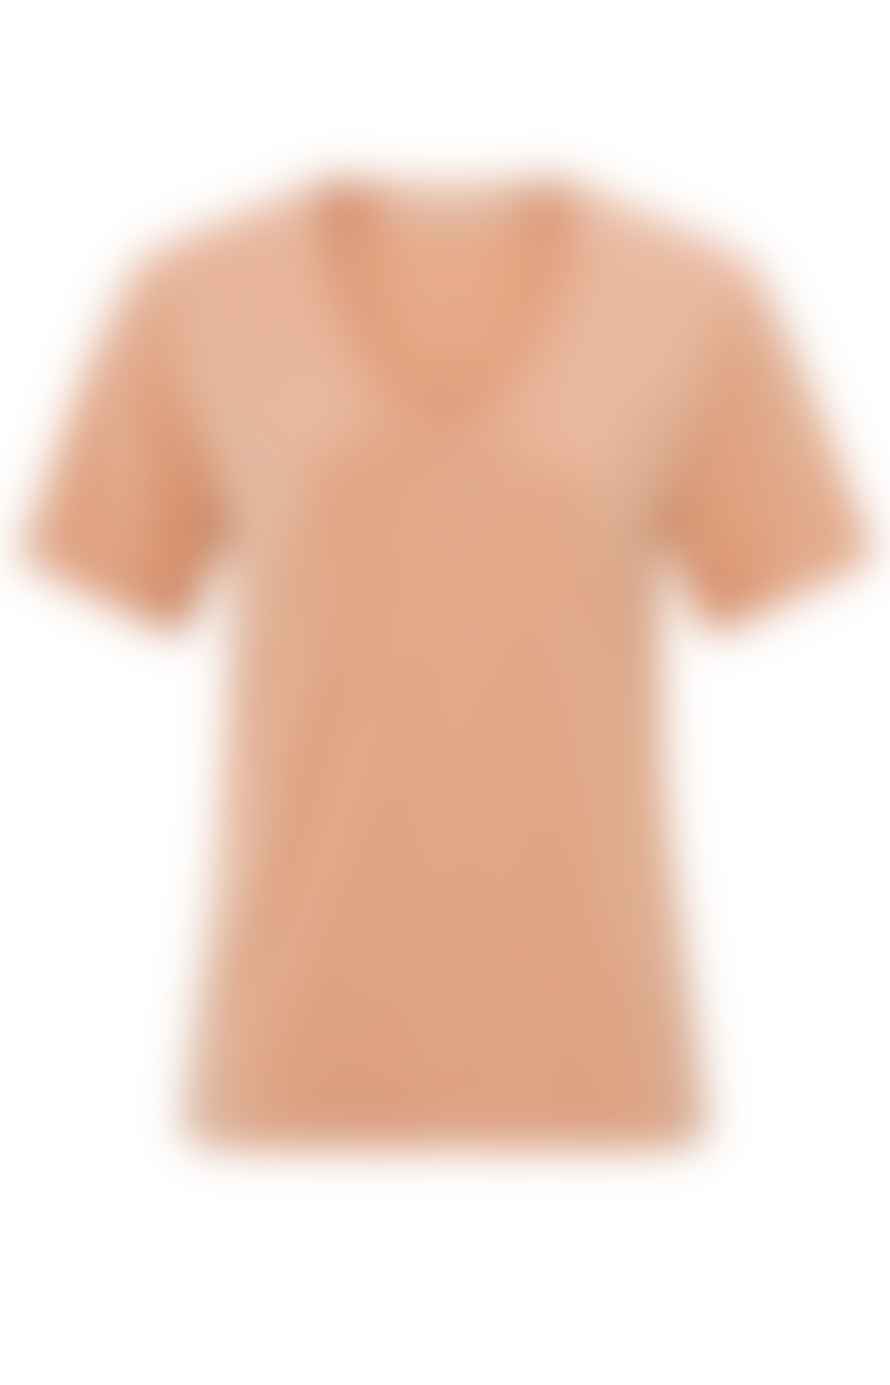 Yaya T-shirt With Rounded V-neck And Short Sleeves | Dusty Coral Orange